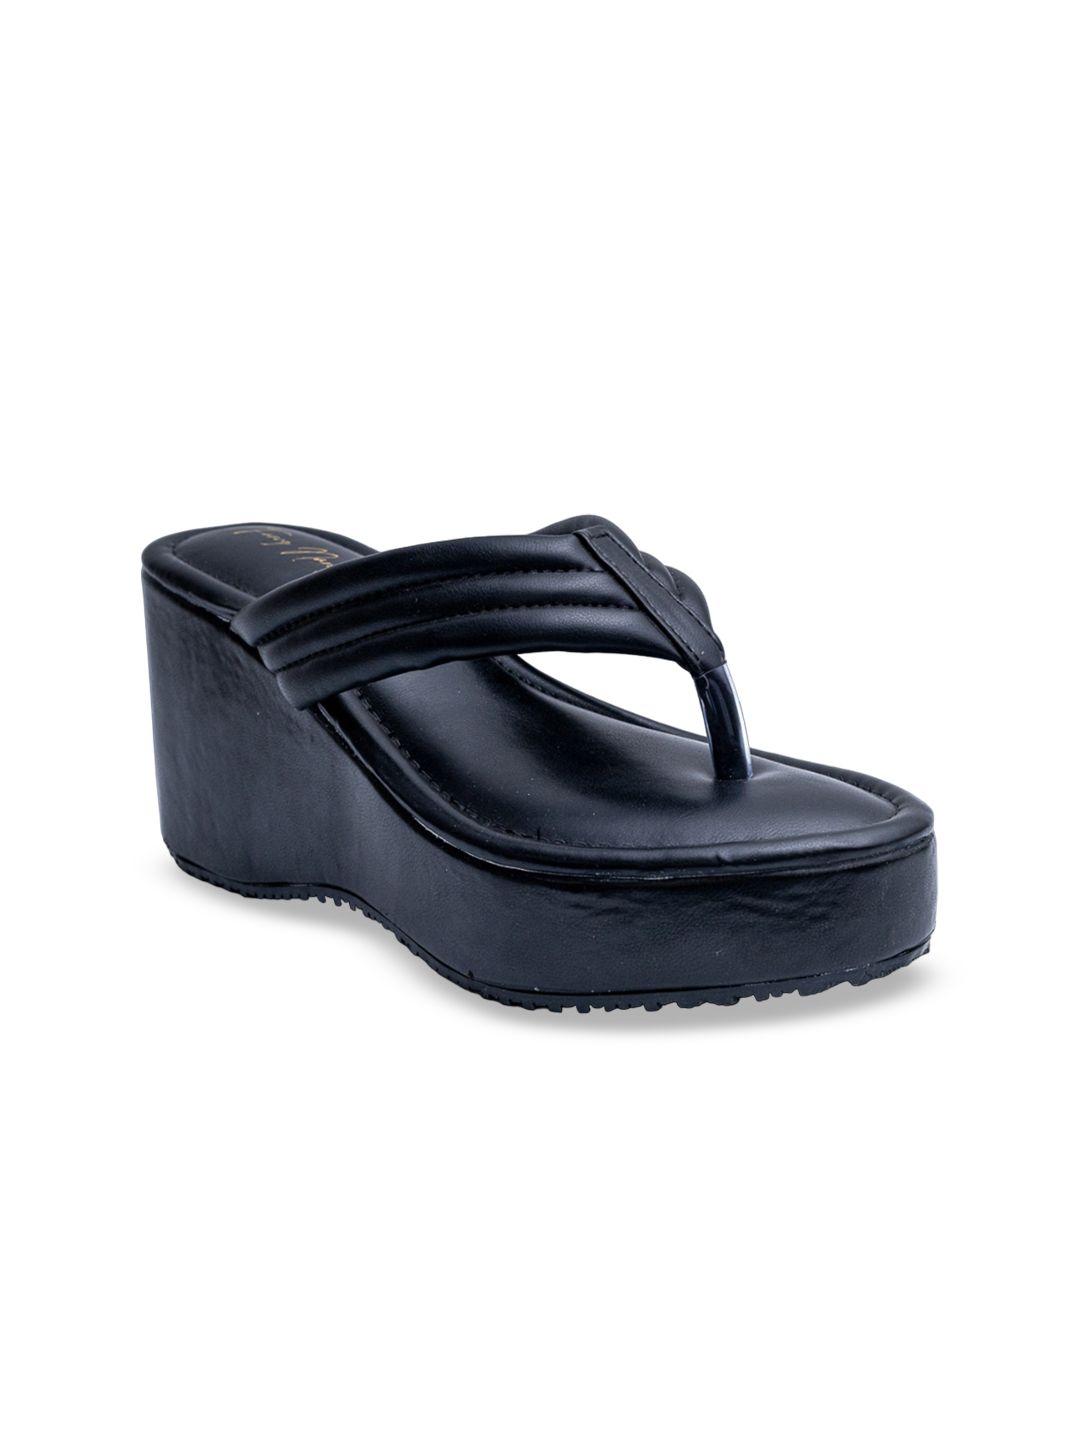 dapper feet-fancy nancy textured open toe flatform heels